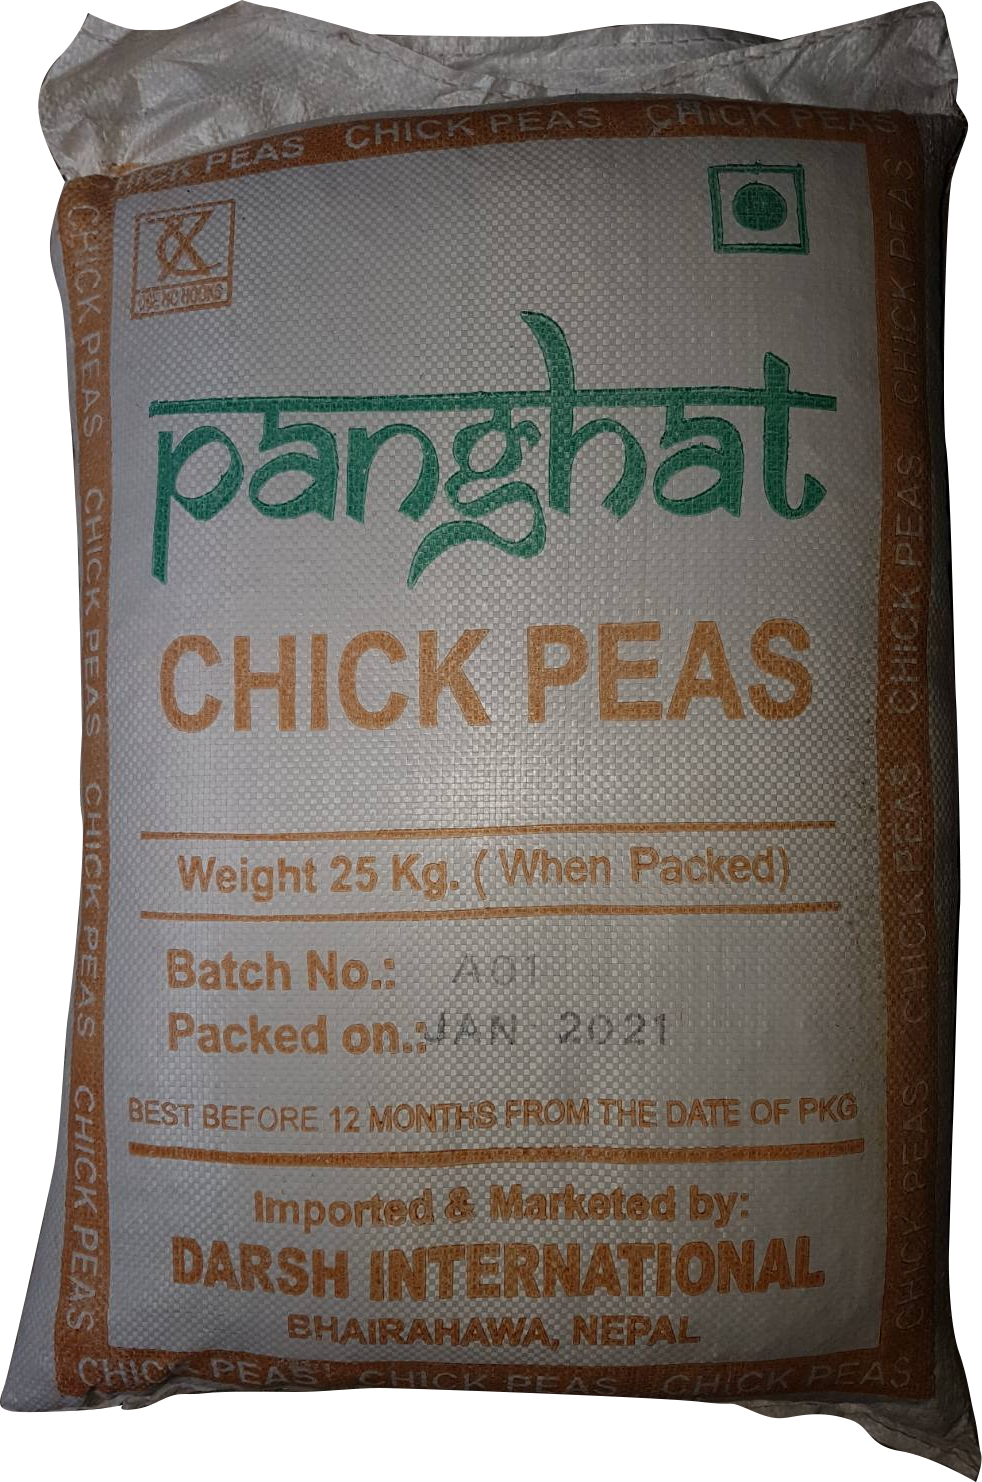 Panghat Chick Peas